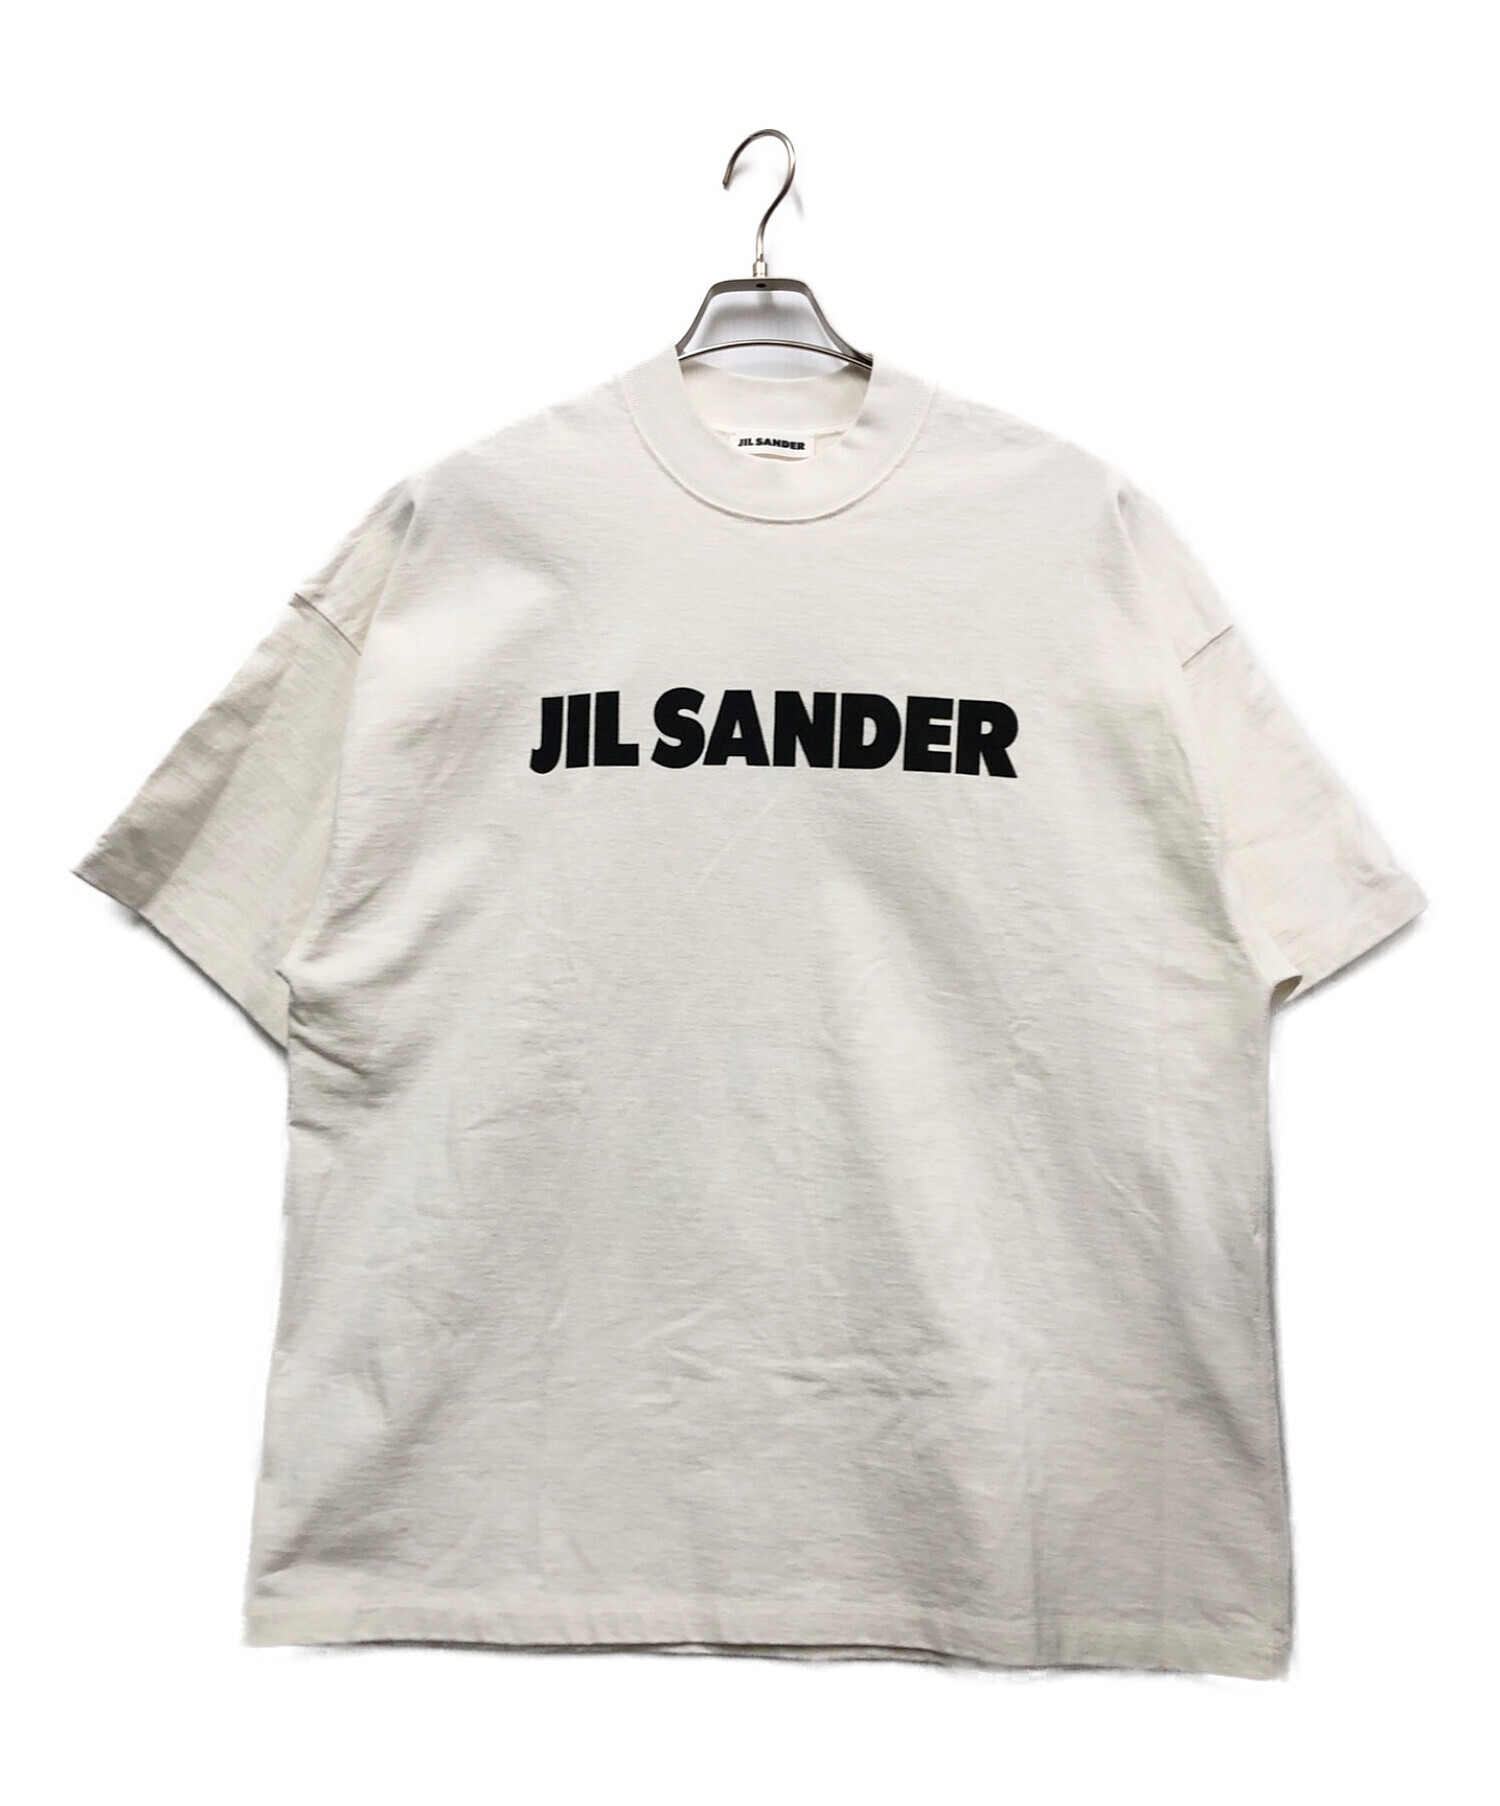 JIL SANDER ジルサンダー ロゴプリントTシャツ ホワイト サイズ:S